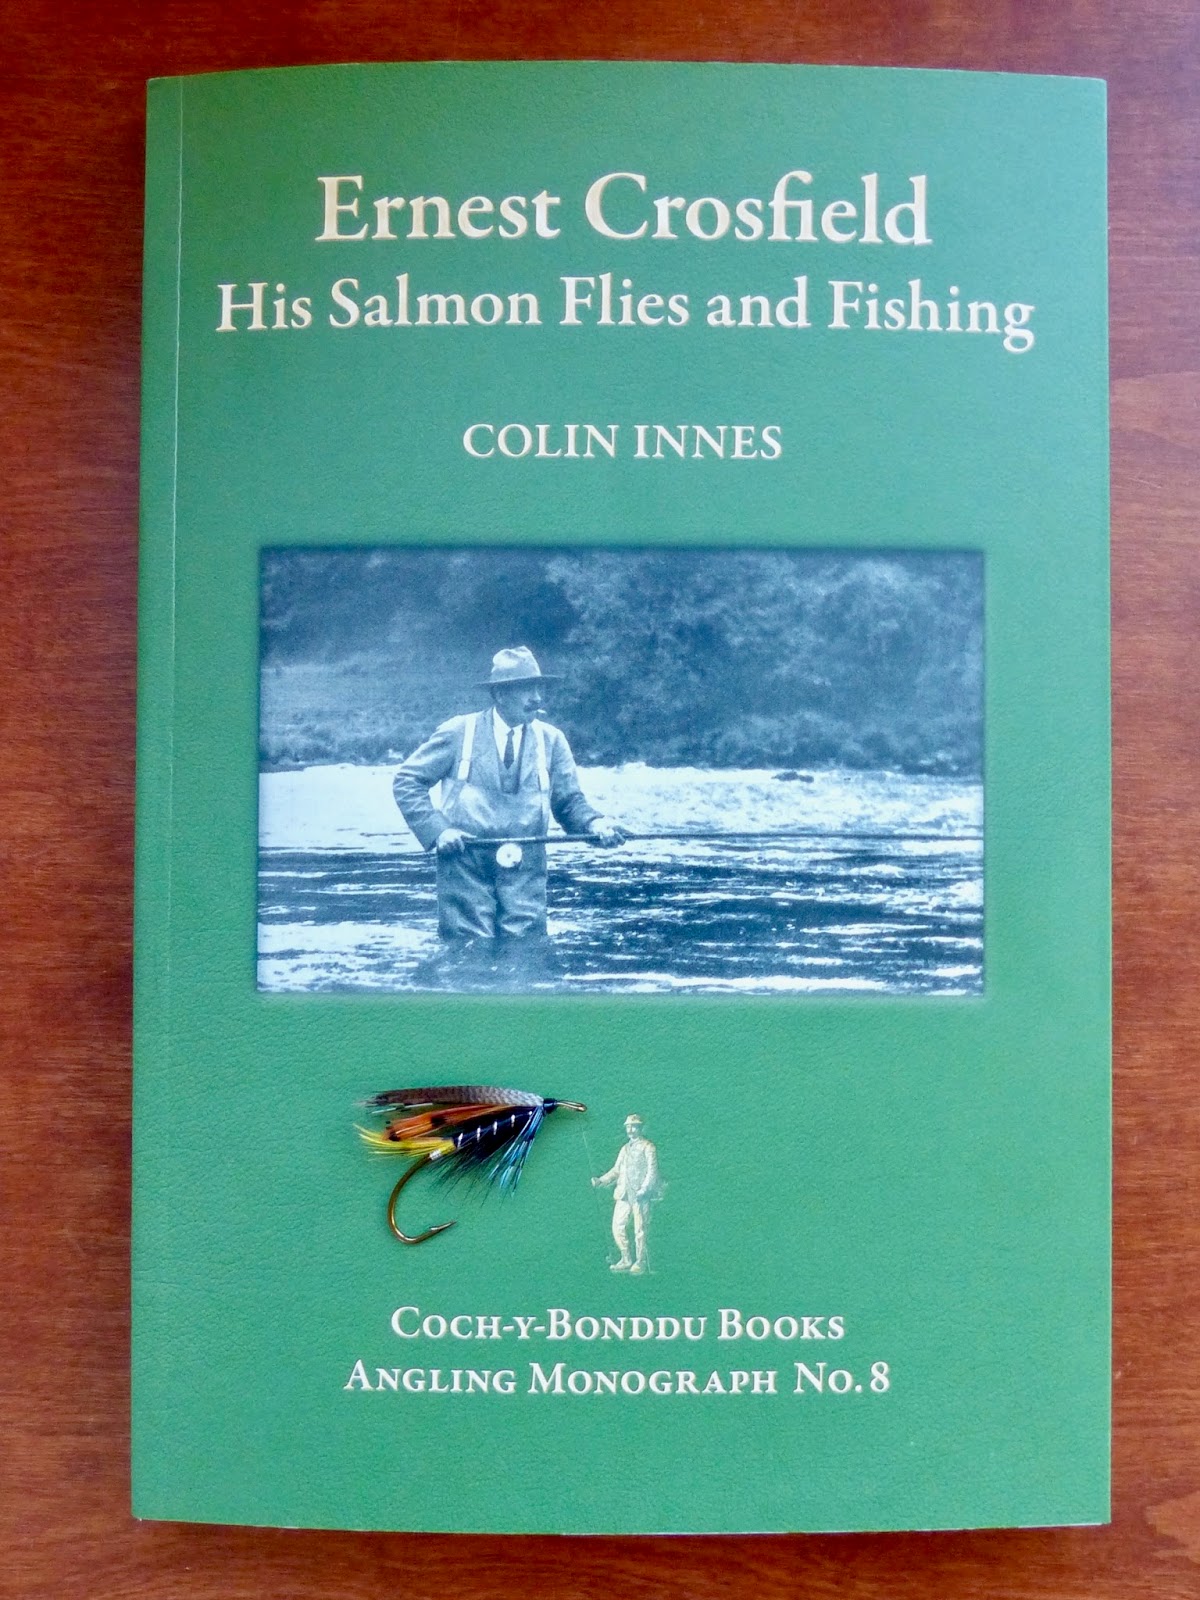 Atlantic Salmon Flies: Ernest Crosfield: His Salmon Flies and Fishing (C.  Innes)